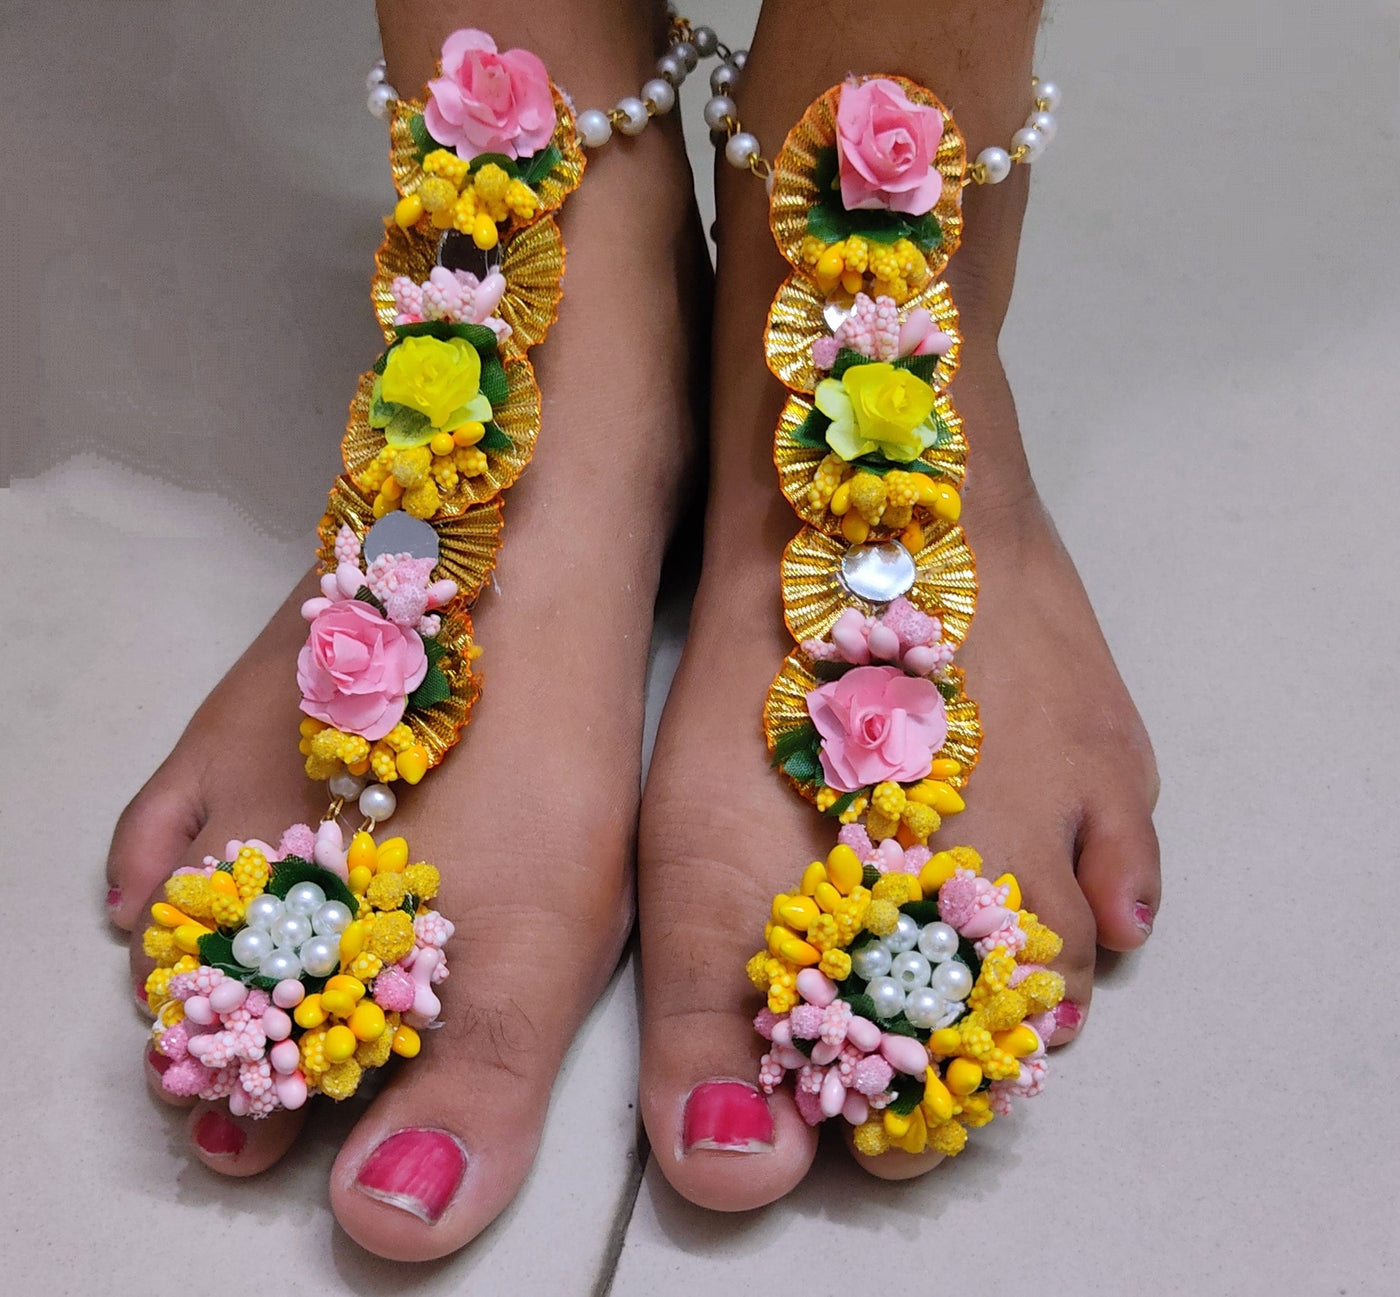 LAMANSH Floral Payal Set Peach - Lemon Yellow / Artificial Flowers , Gotta , Mirror / 2 LAMANSH® (Set of 2) 🌺Floral Anklets attached to toe (Payal) Set / Anklets for Mehendi & Haldi Ceremony / Bridal Accessories set